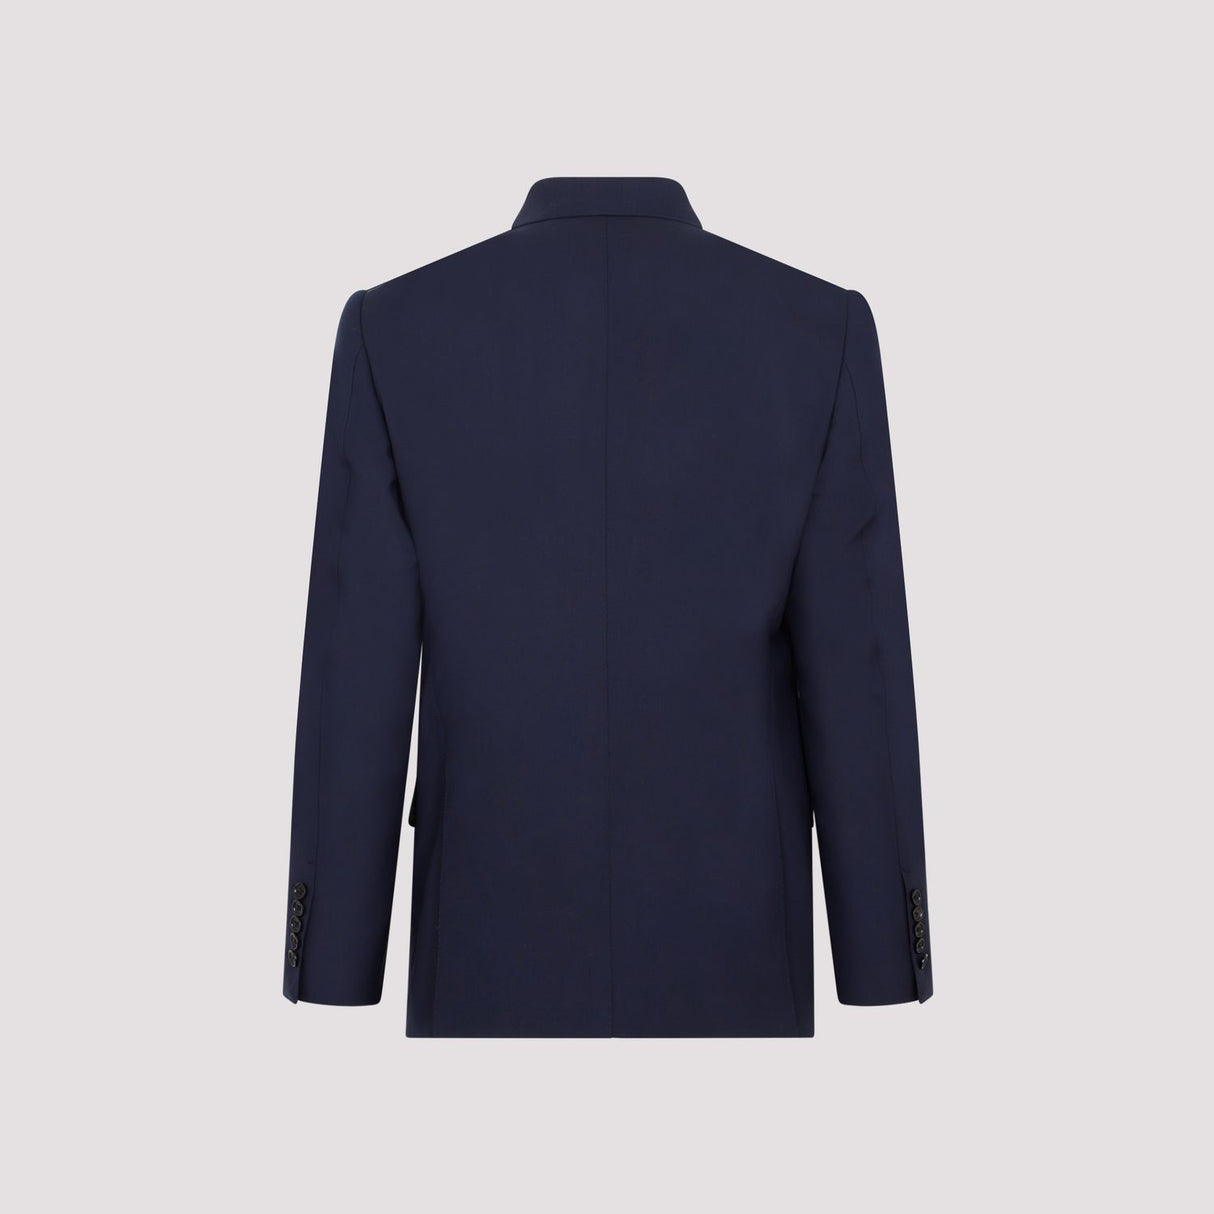 Men's Blue Wool Suit - SS24 Collection